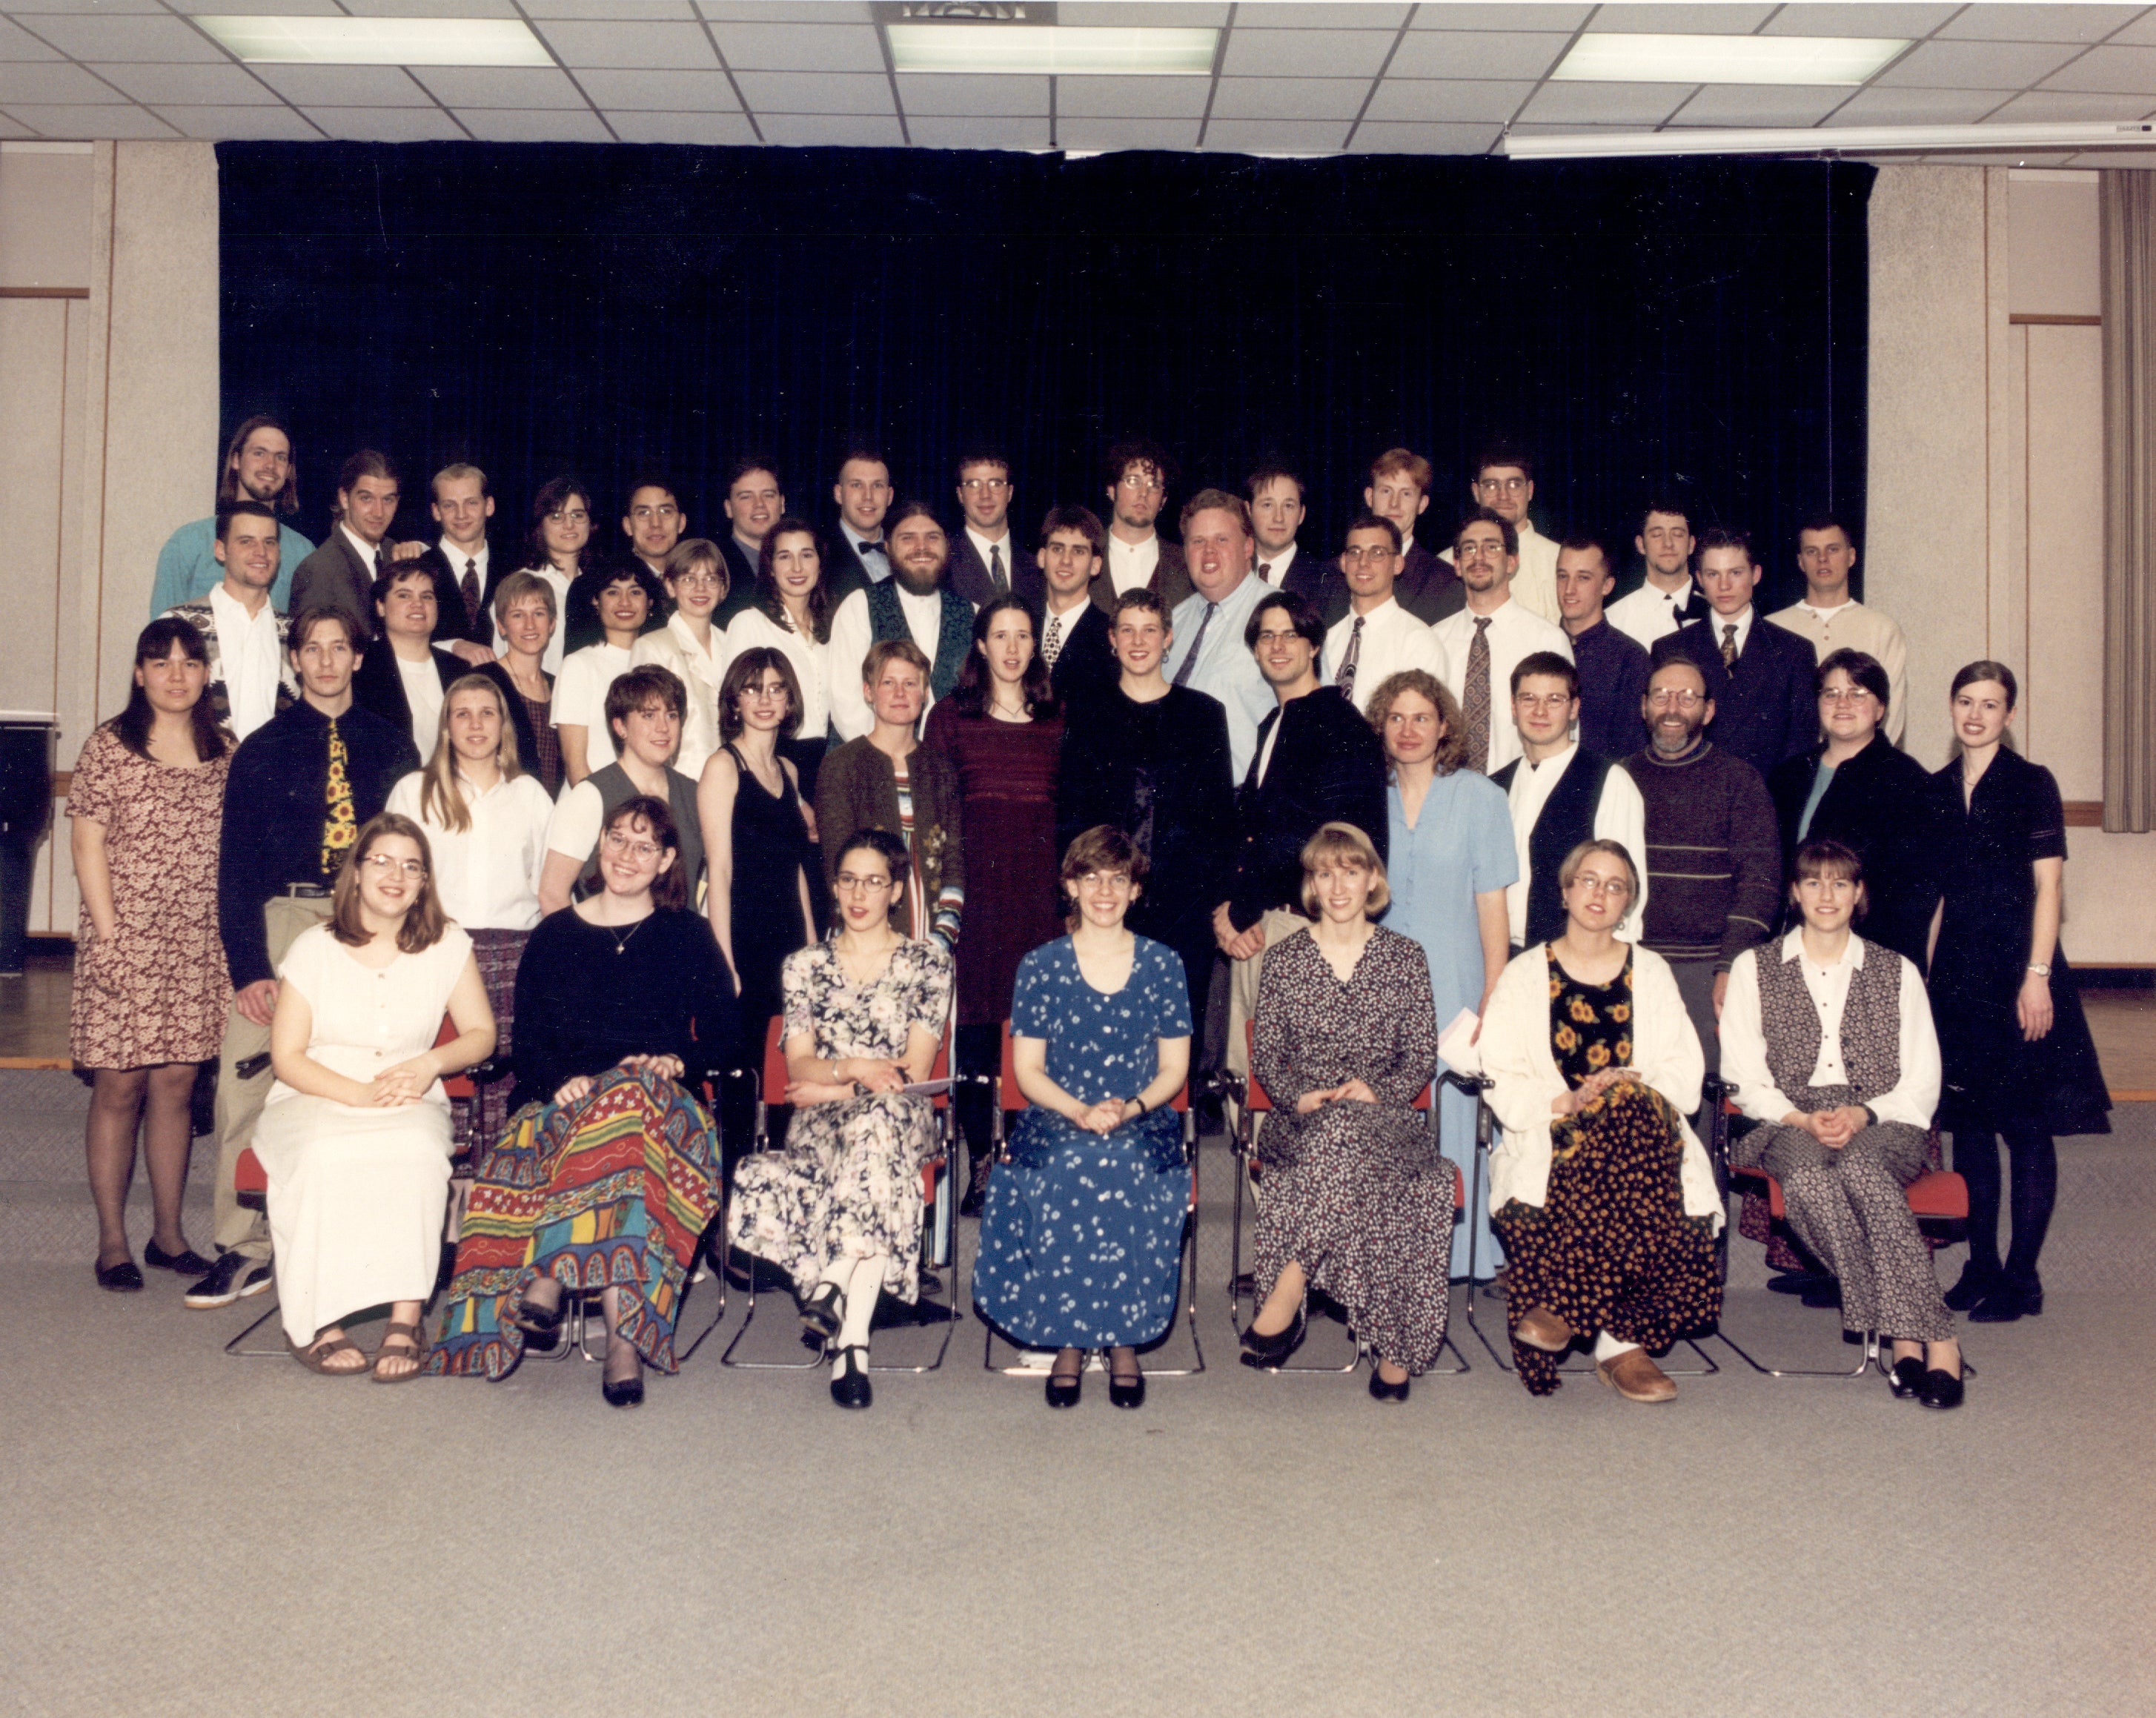 Graduating Class of 1997